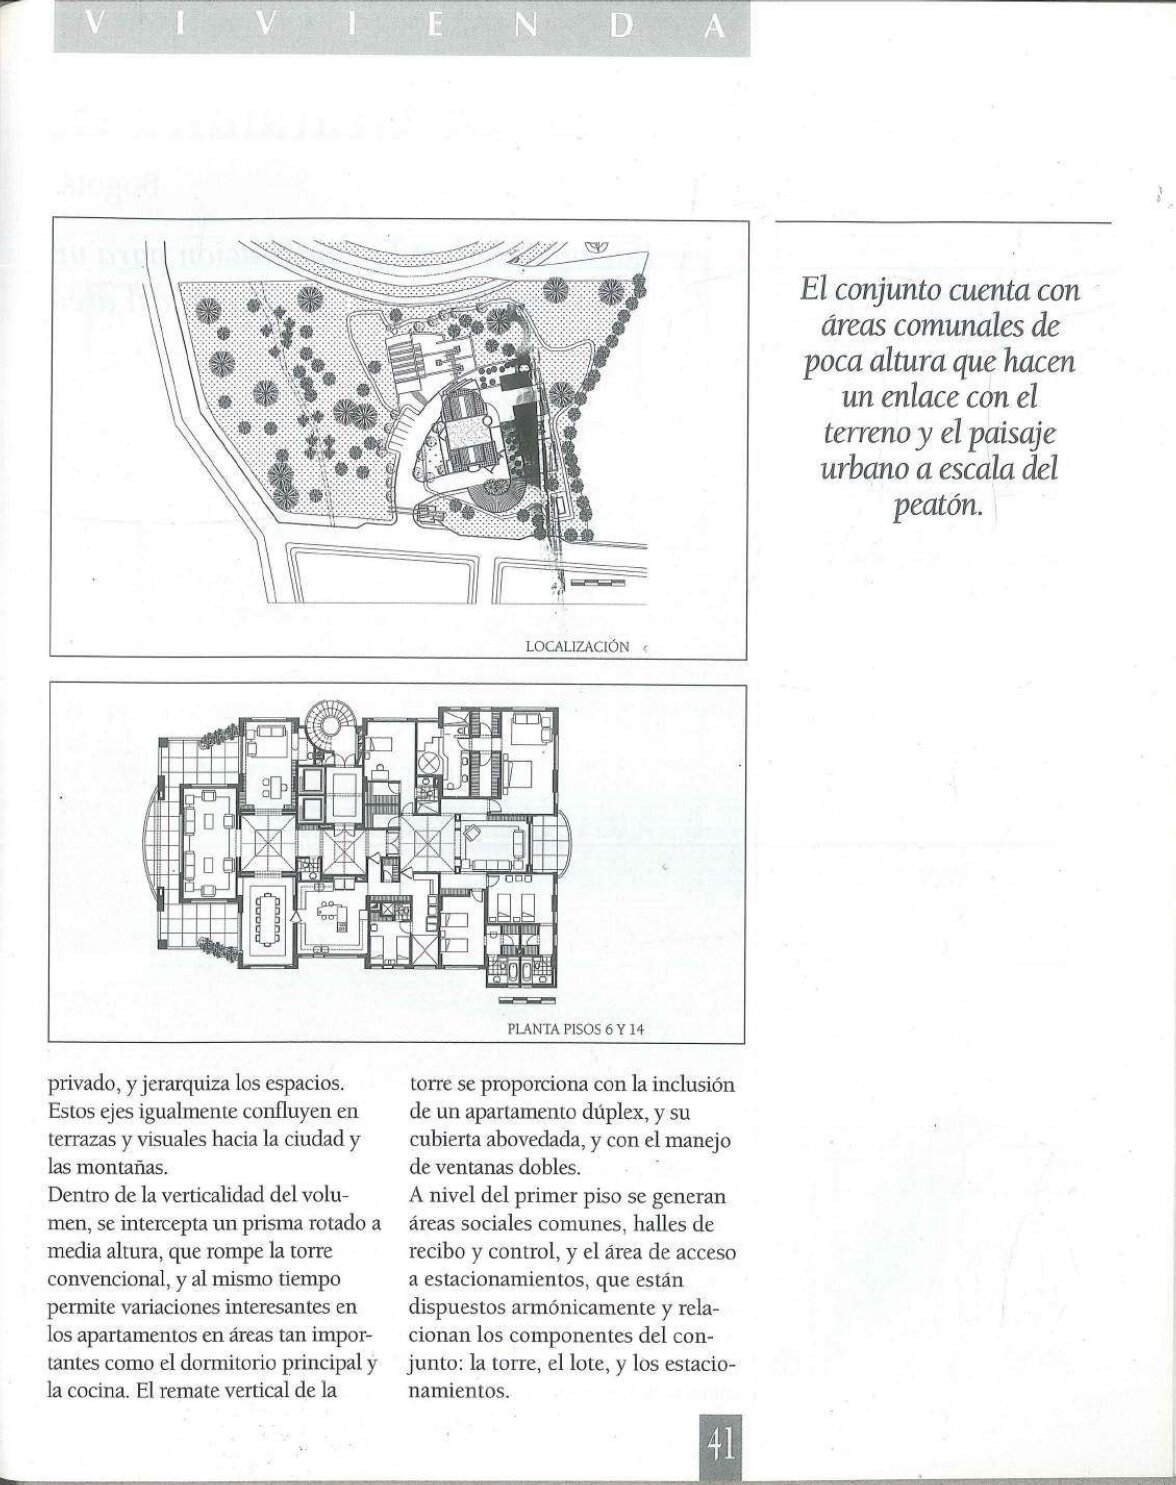 2002_Contexto Urbano- Obra reciente 1995-2002. REVISTA PROA 1_compressed (1)_page-0043.jpg